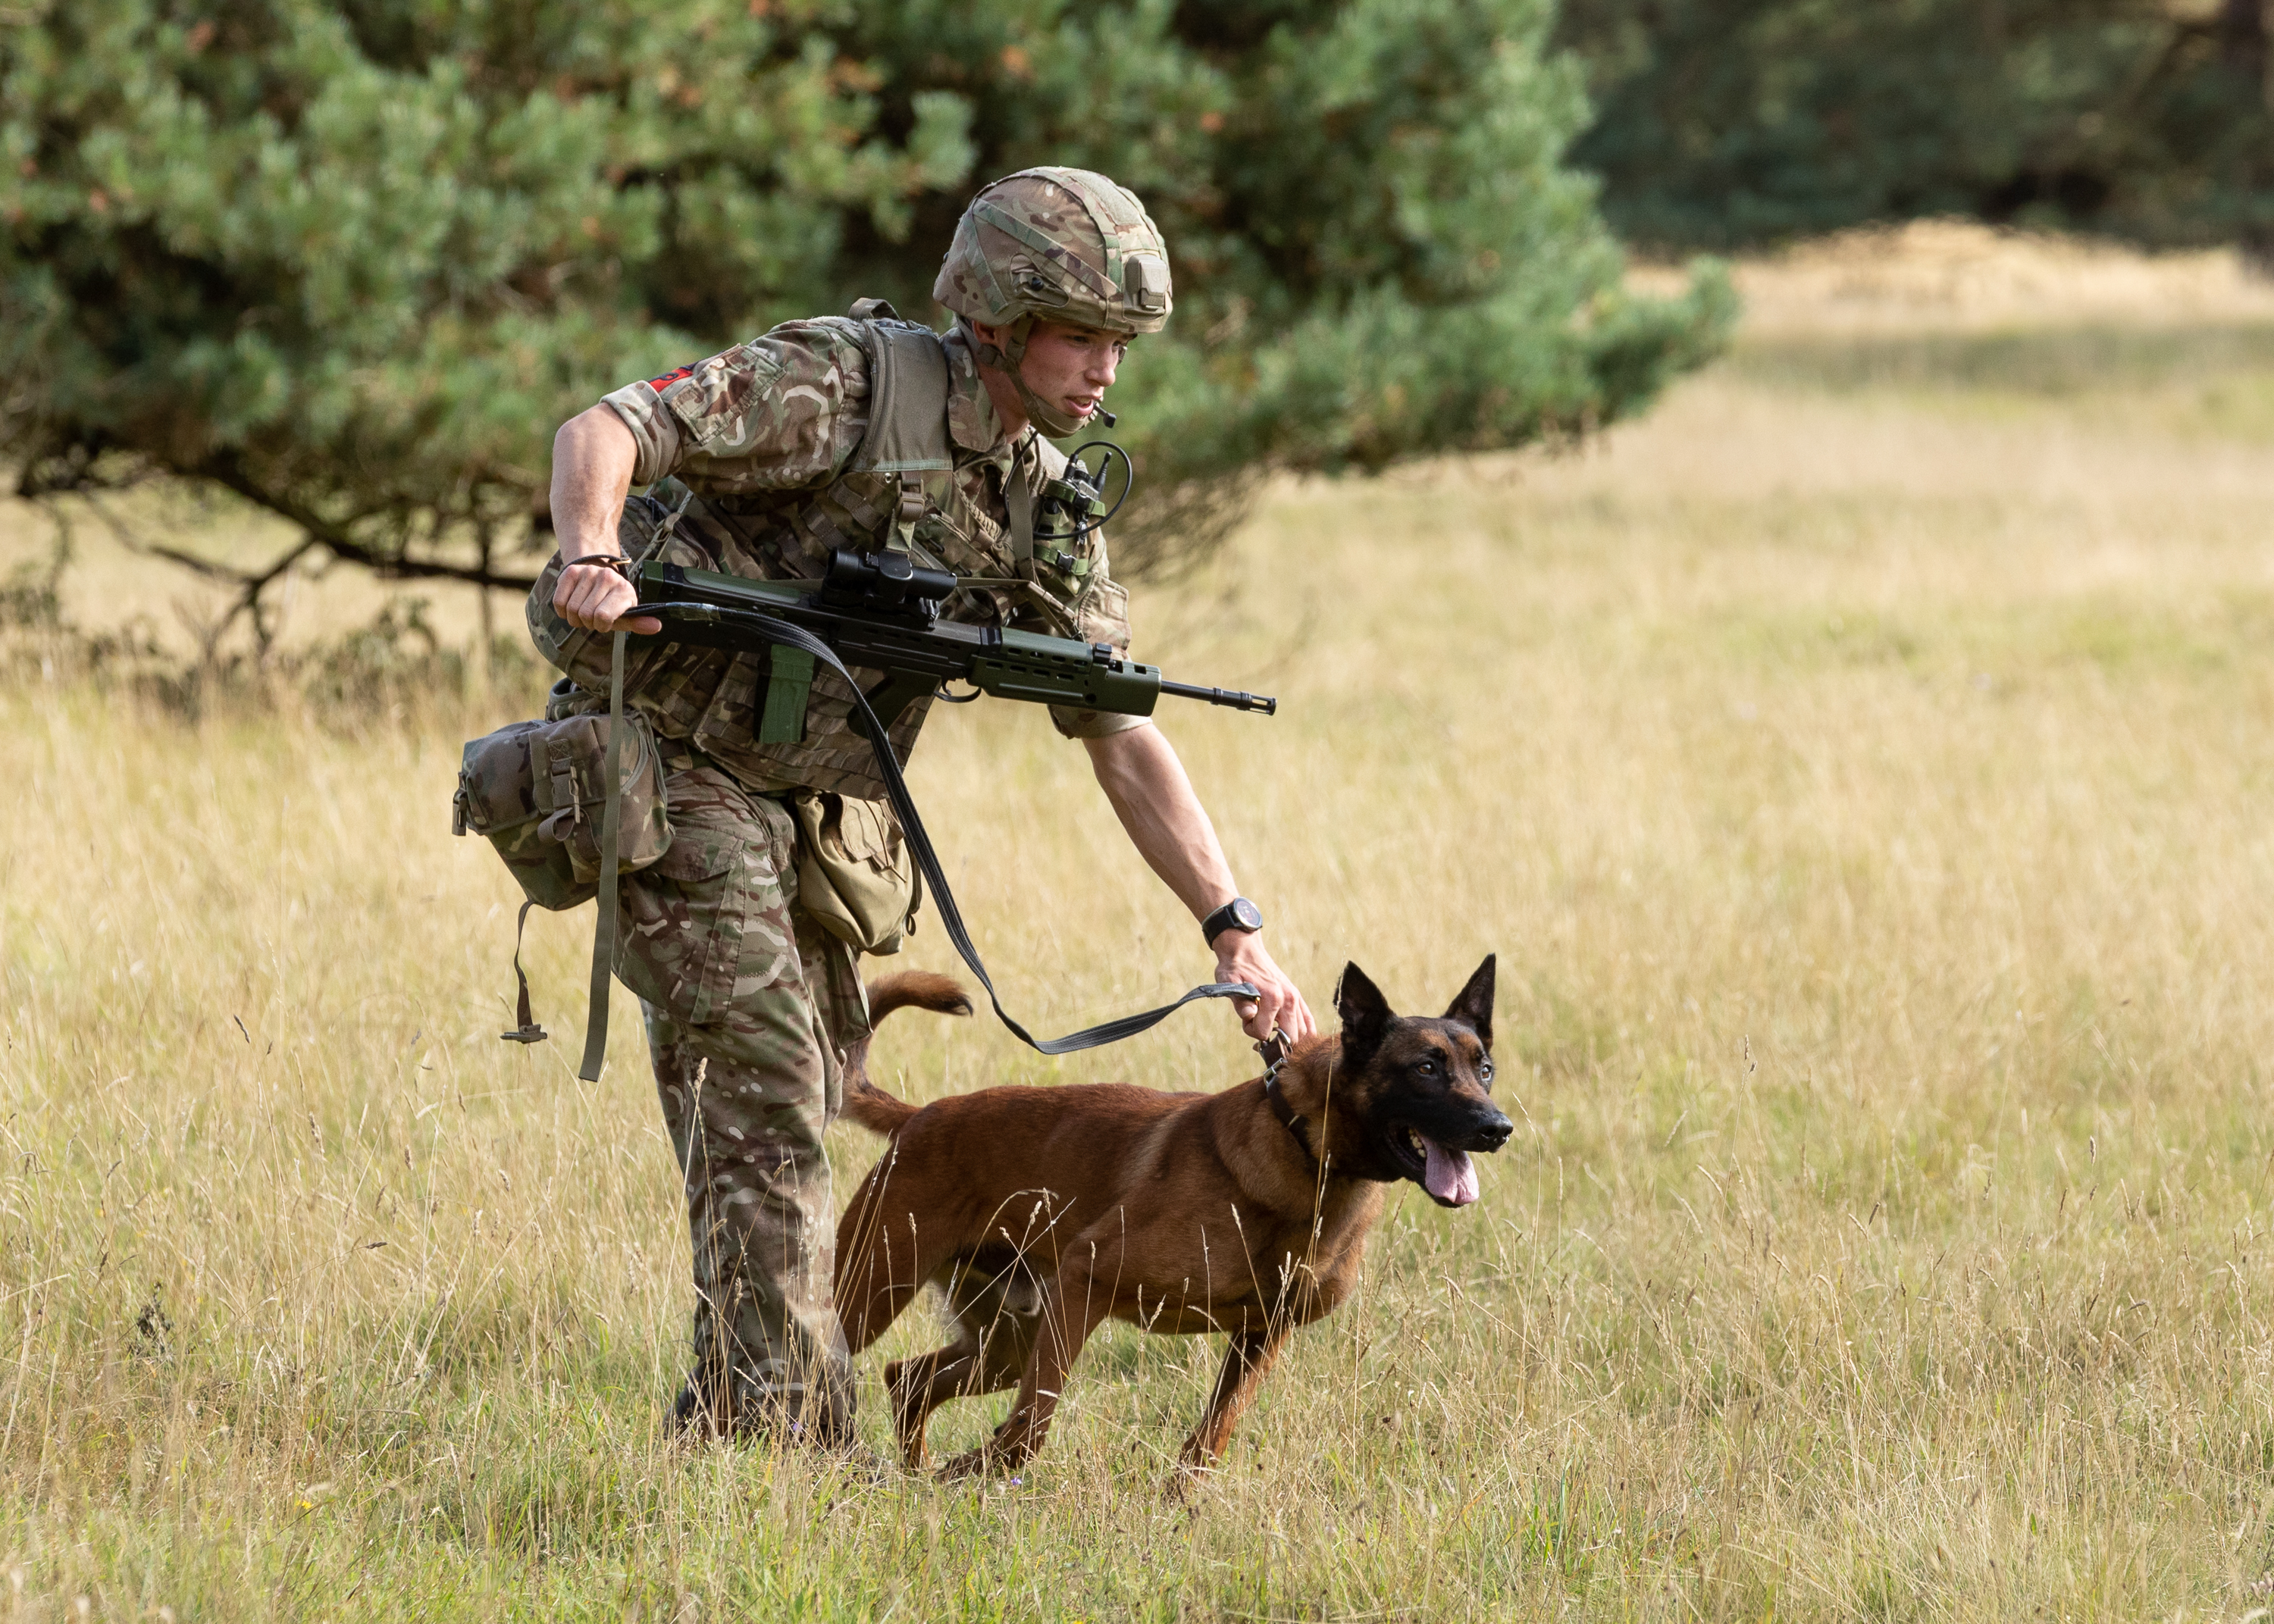 Dog and Handler on patrol.